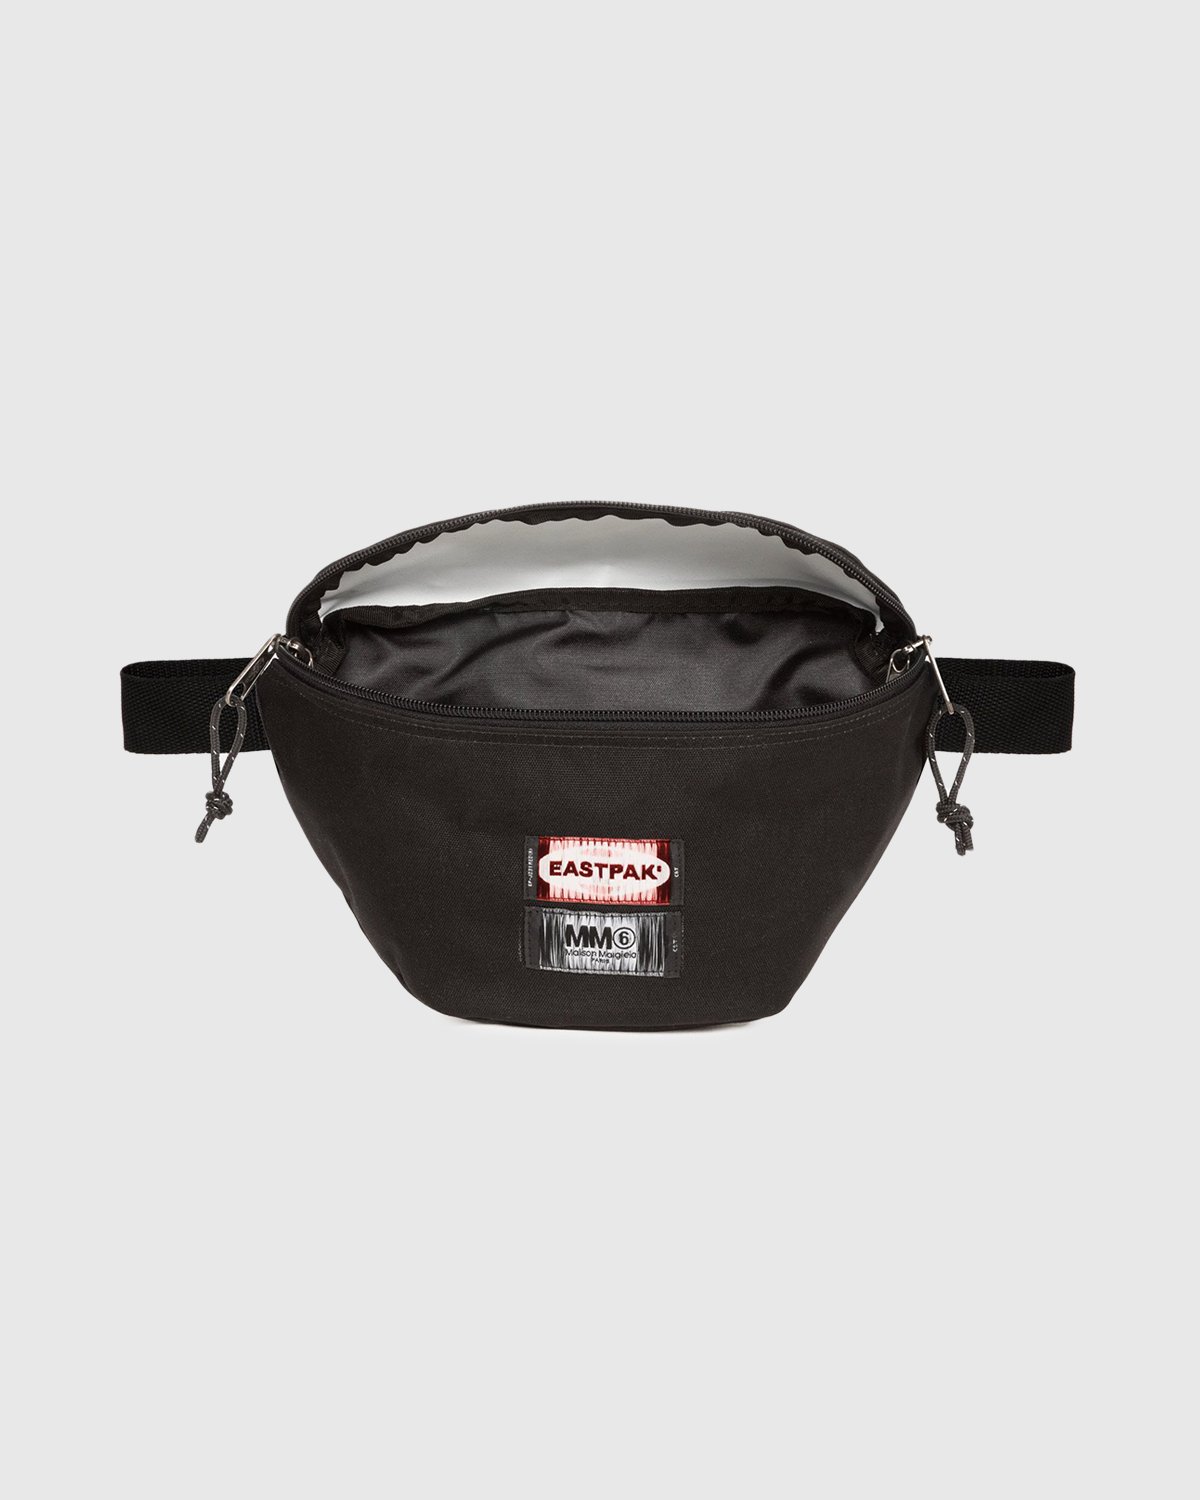 MM6 Maison Margiela x Eastpak - Belt Bag Black - Accessories - Black - Image 2